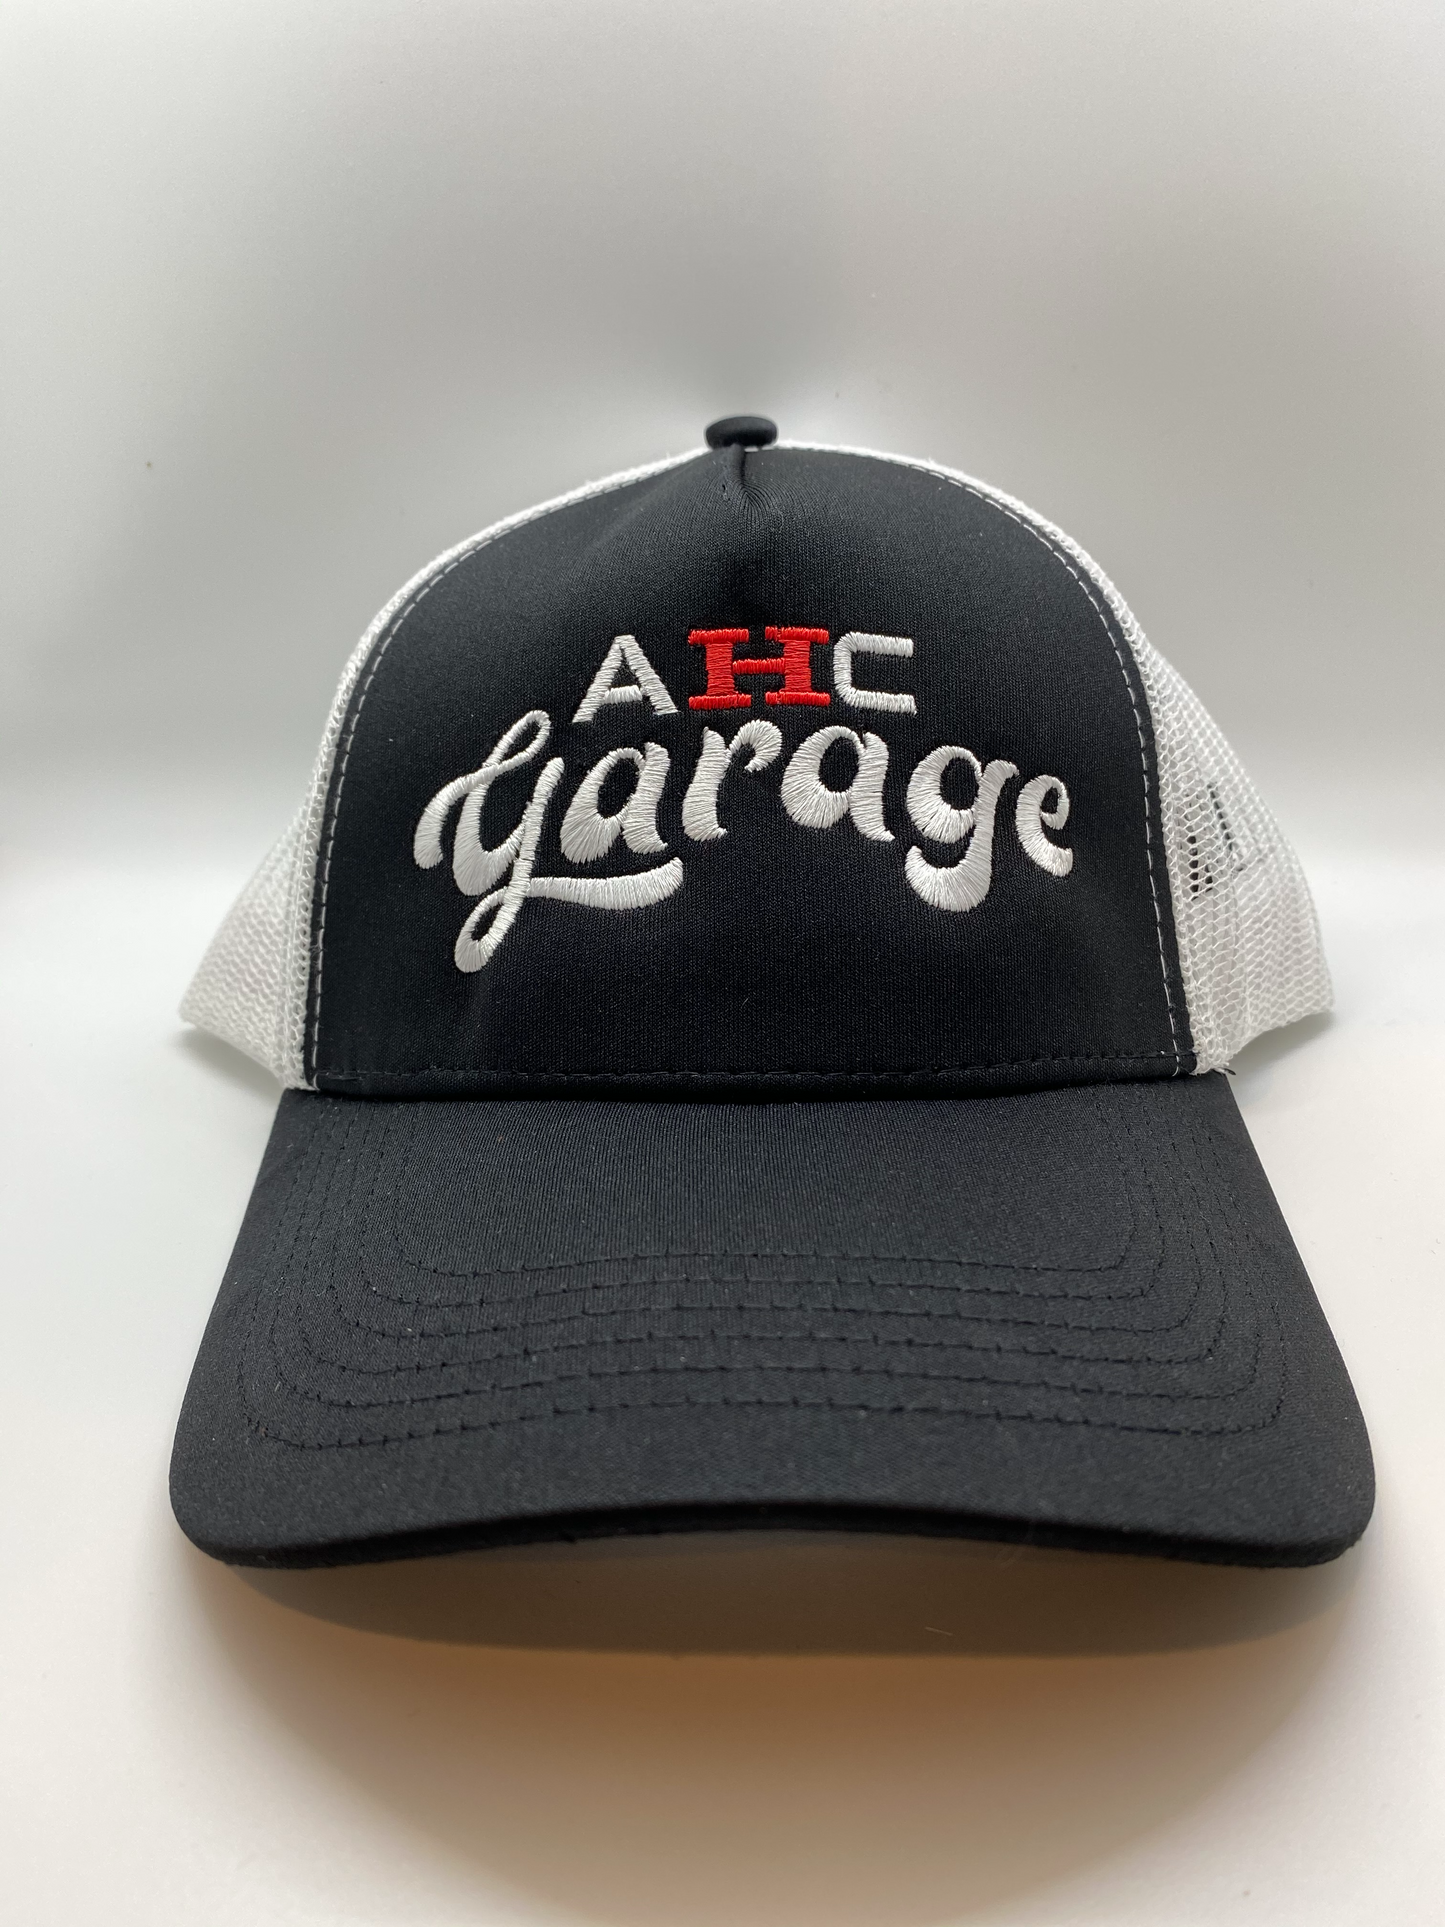 AHC Garage Mesh-Back SnapBack Hat